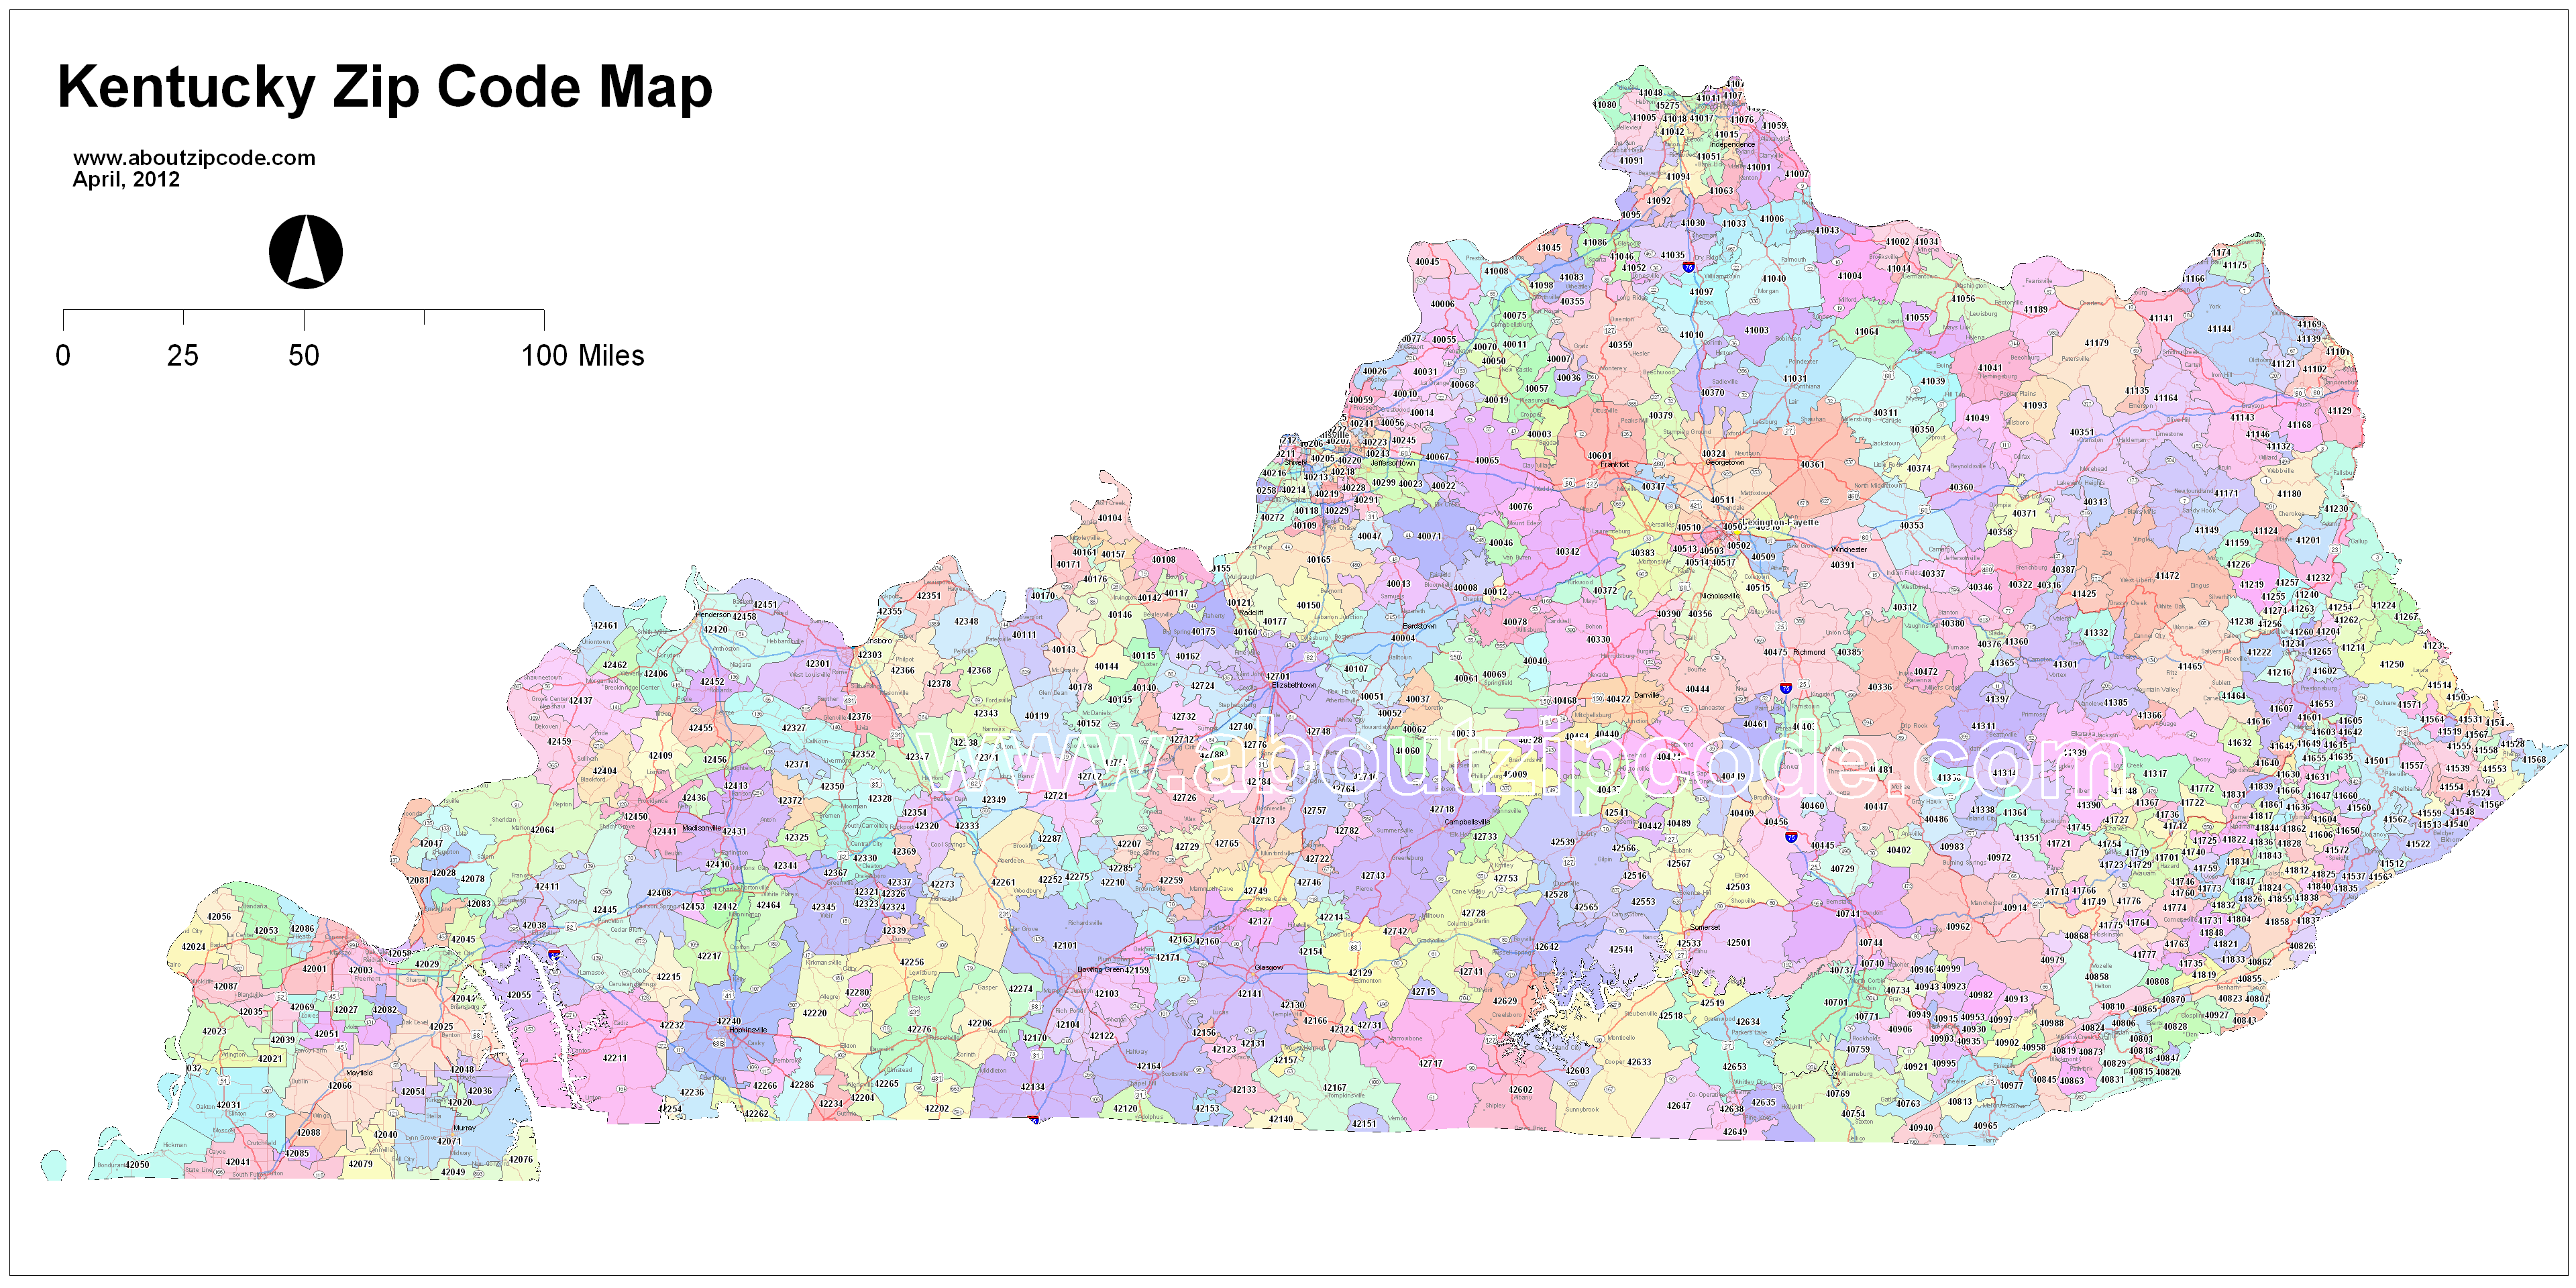 Kentucky Zip Code Maps Free Kentucky Zip Code Maps